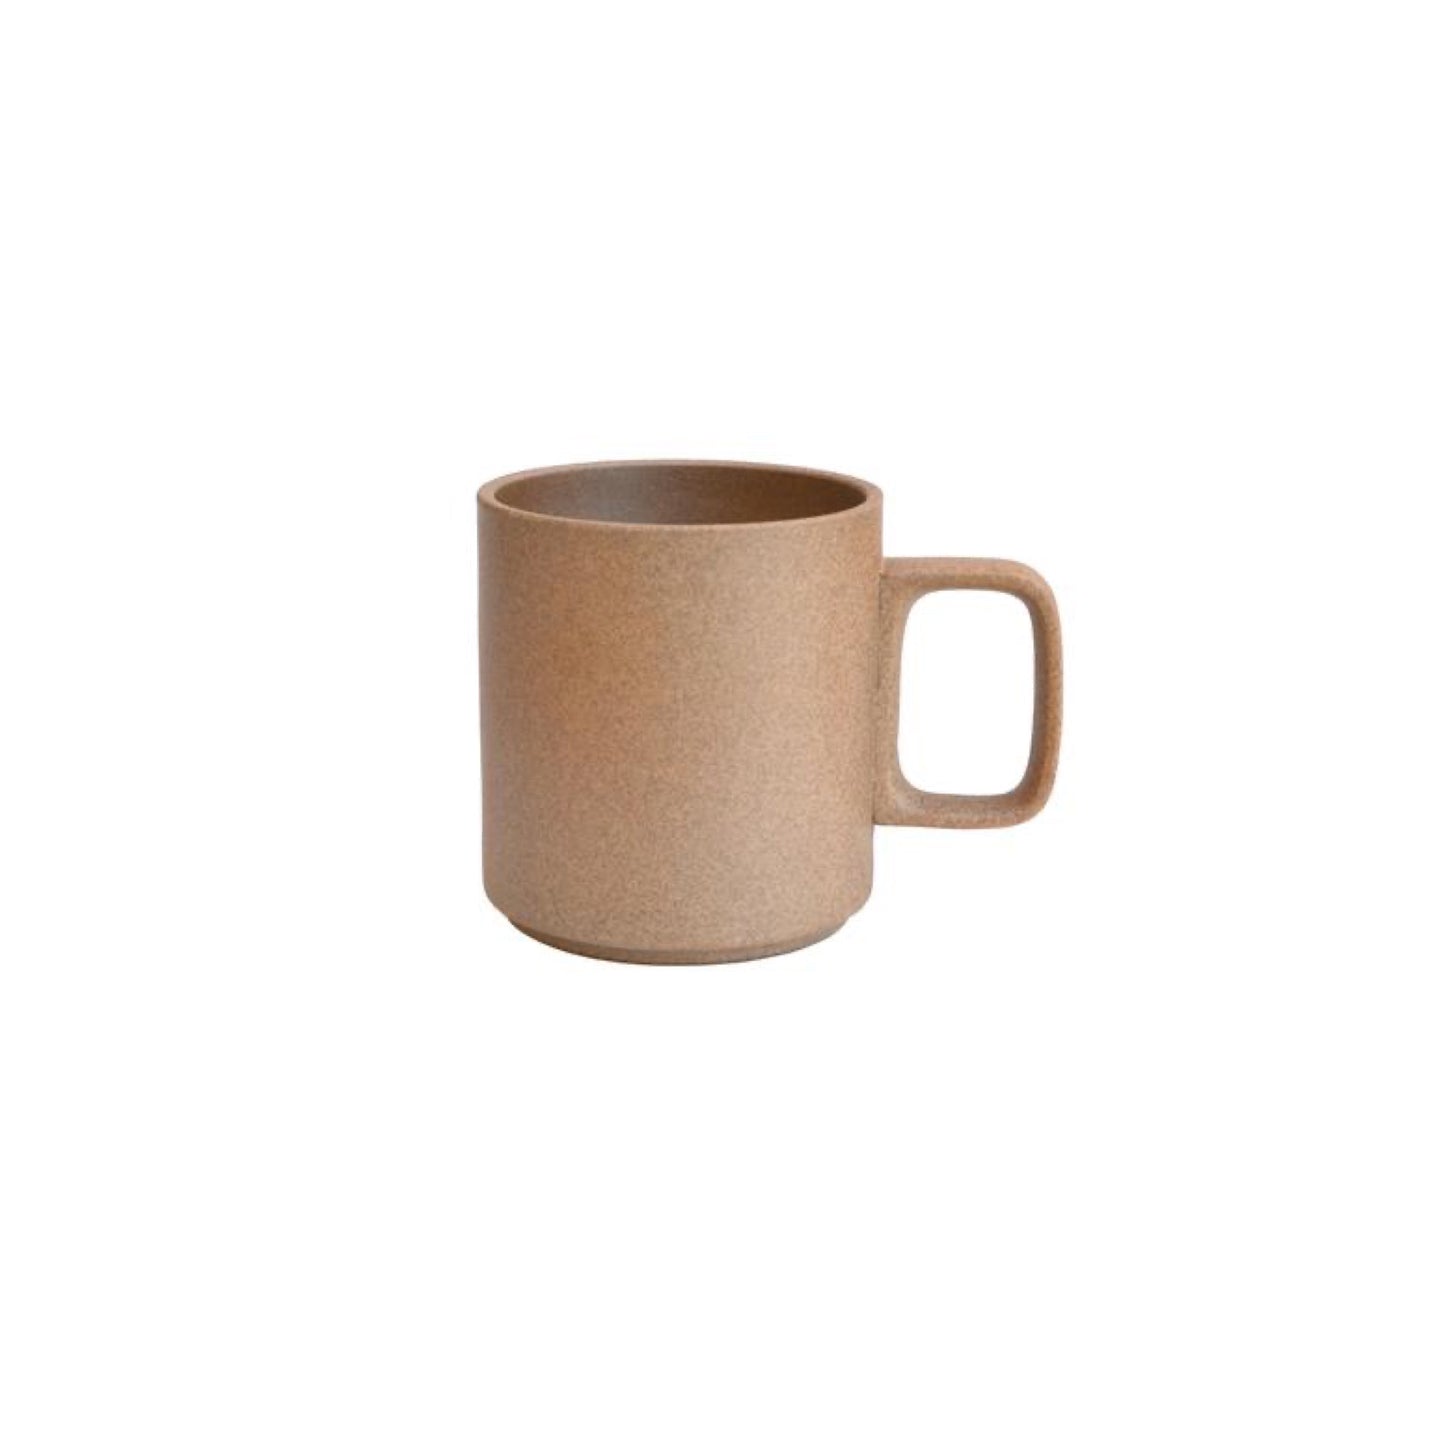 hasami porcelain / mug - natural